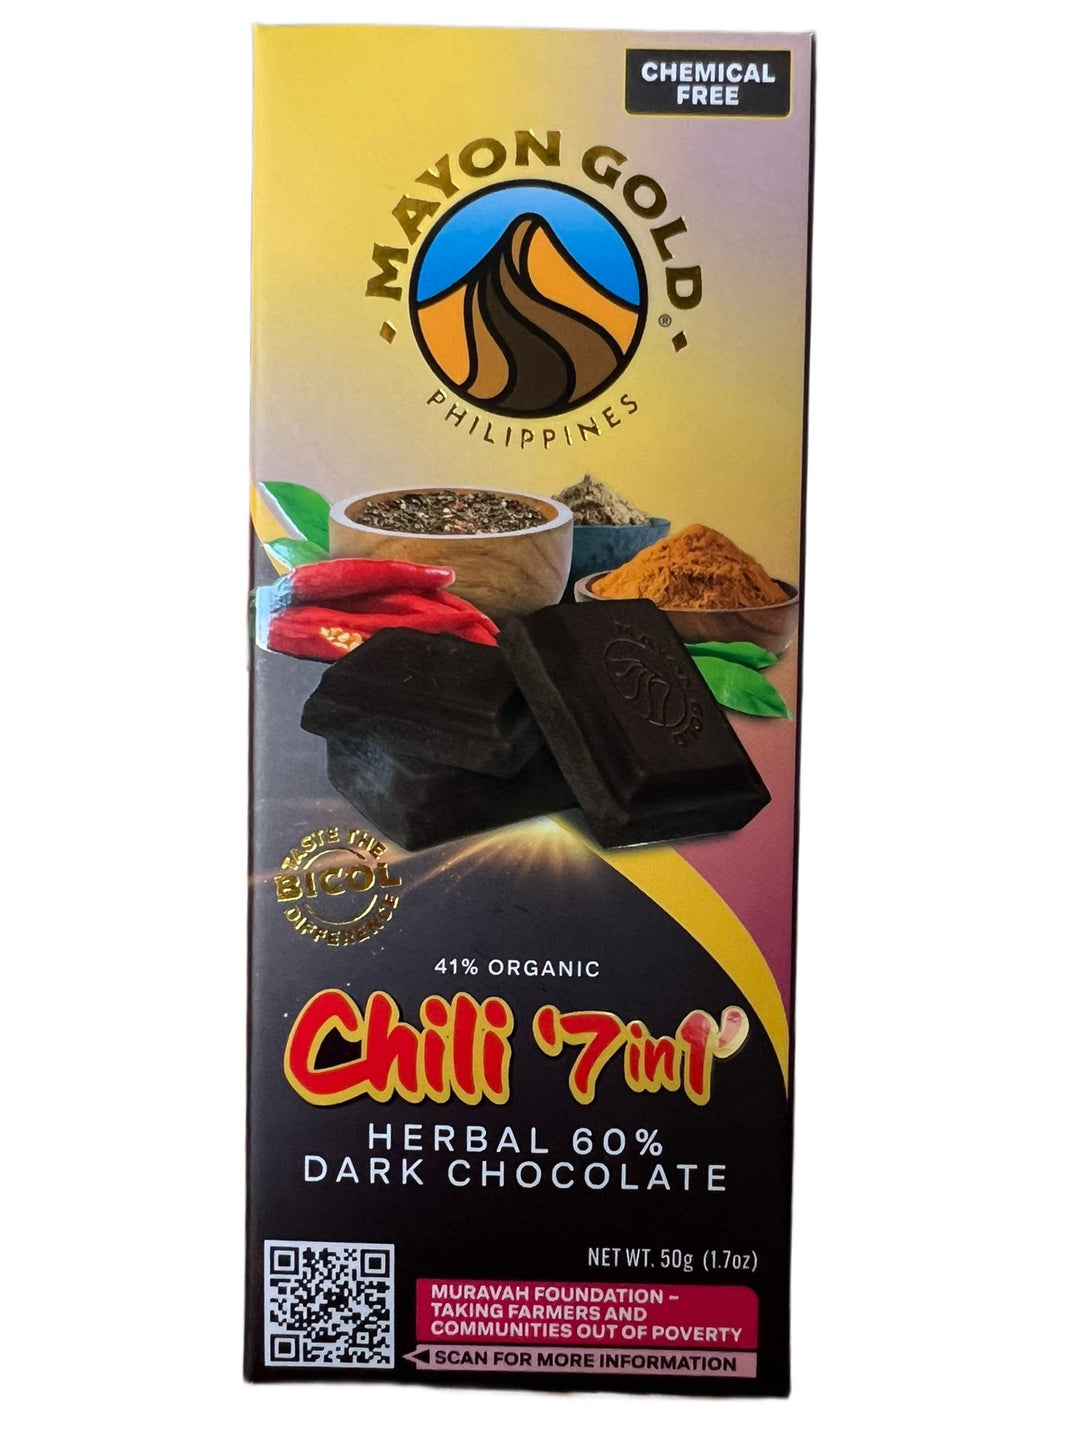 Mayon Gold Chili 7in1 Herbal 60% Dark Chocolate Bar